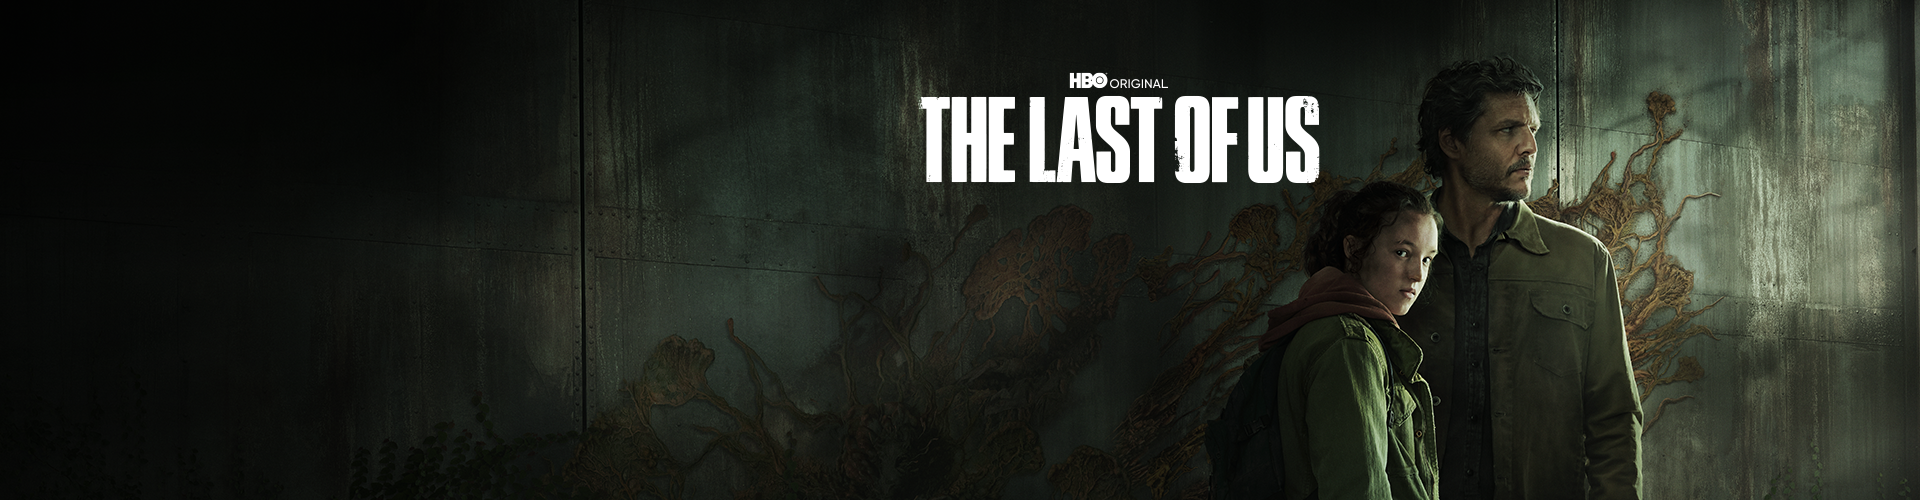 Grafika promocyjna do serialu The Last of Us